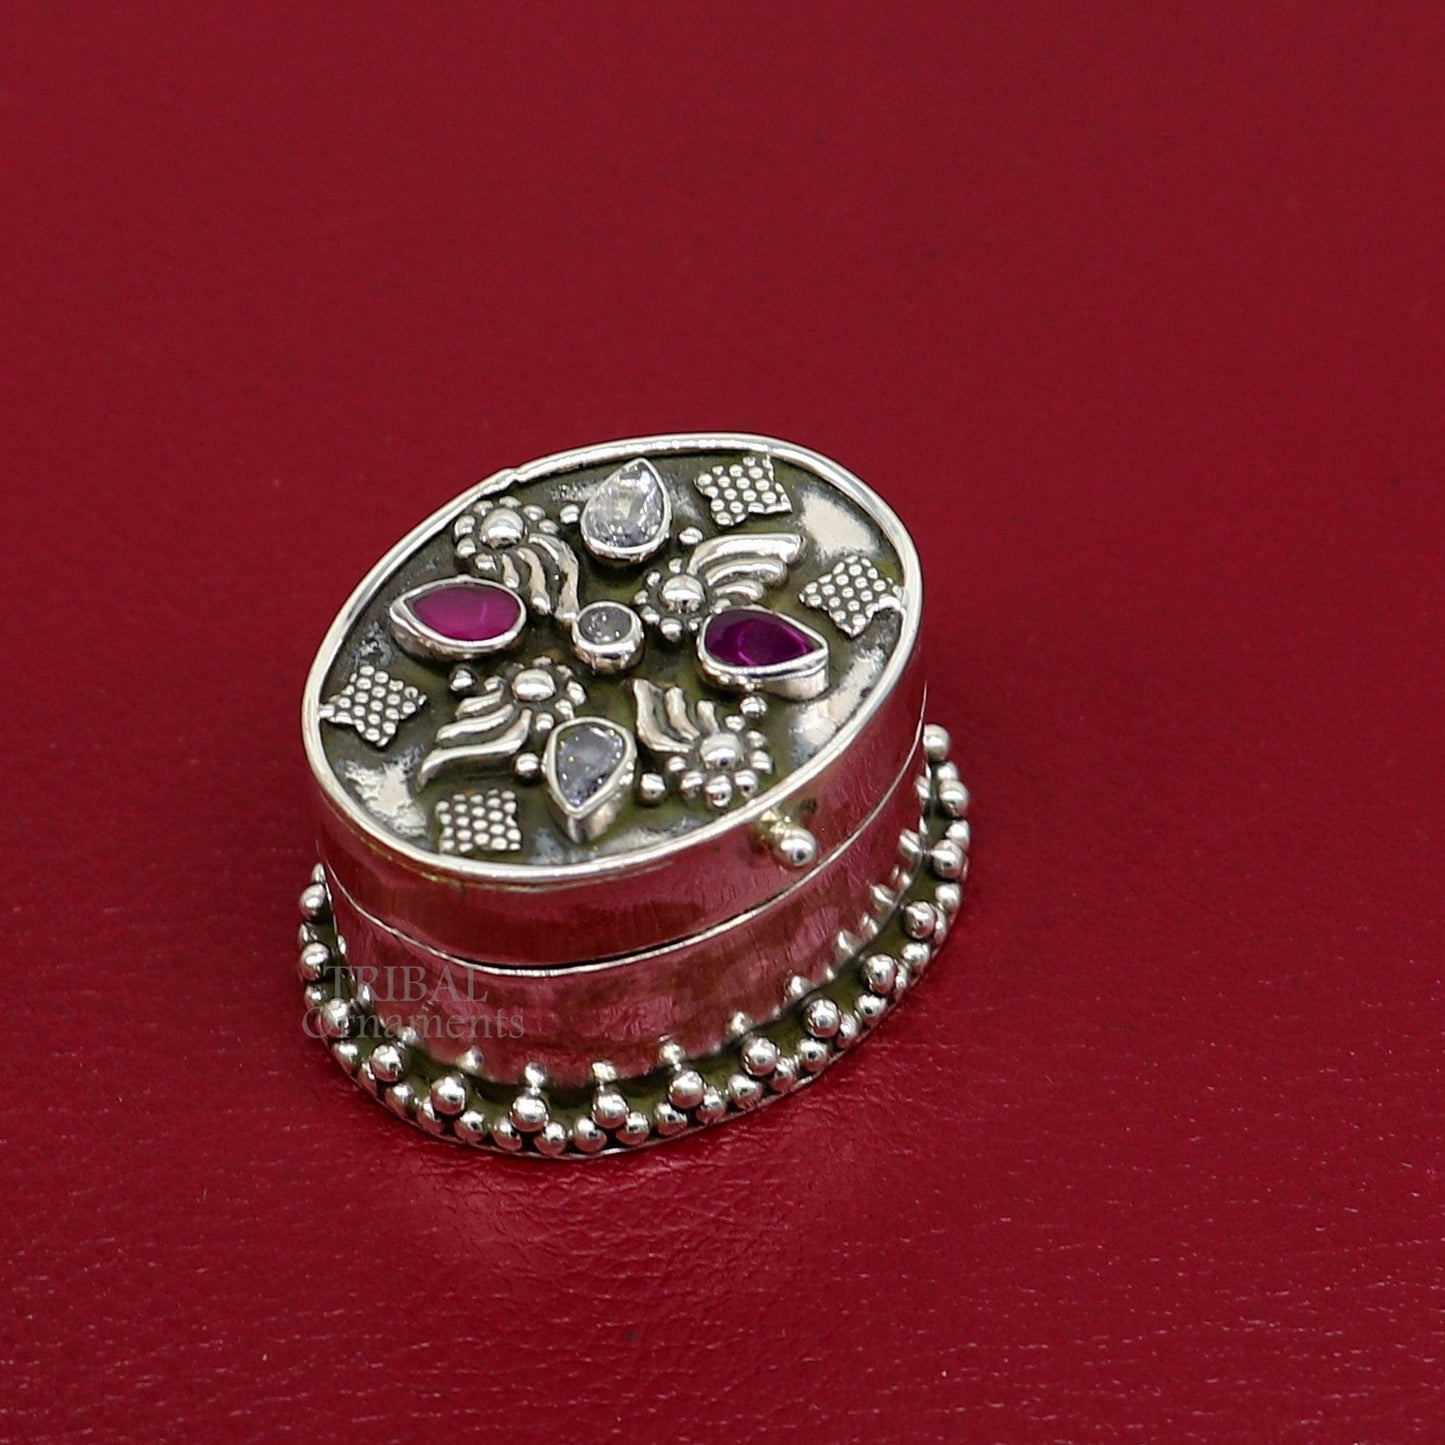 925 sterling silver handcrafted oval shape design red stone work trinket box, kajal eyeliner box, Sindur box brides gift silver box stb760 - TRIBAL ORNAMENTS